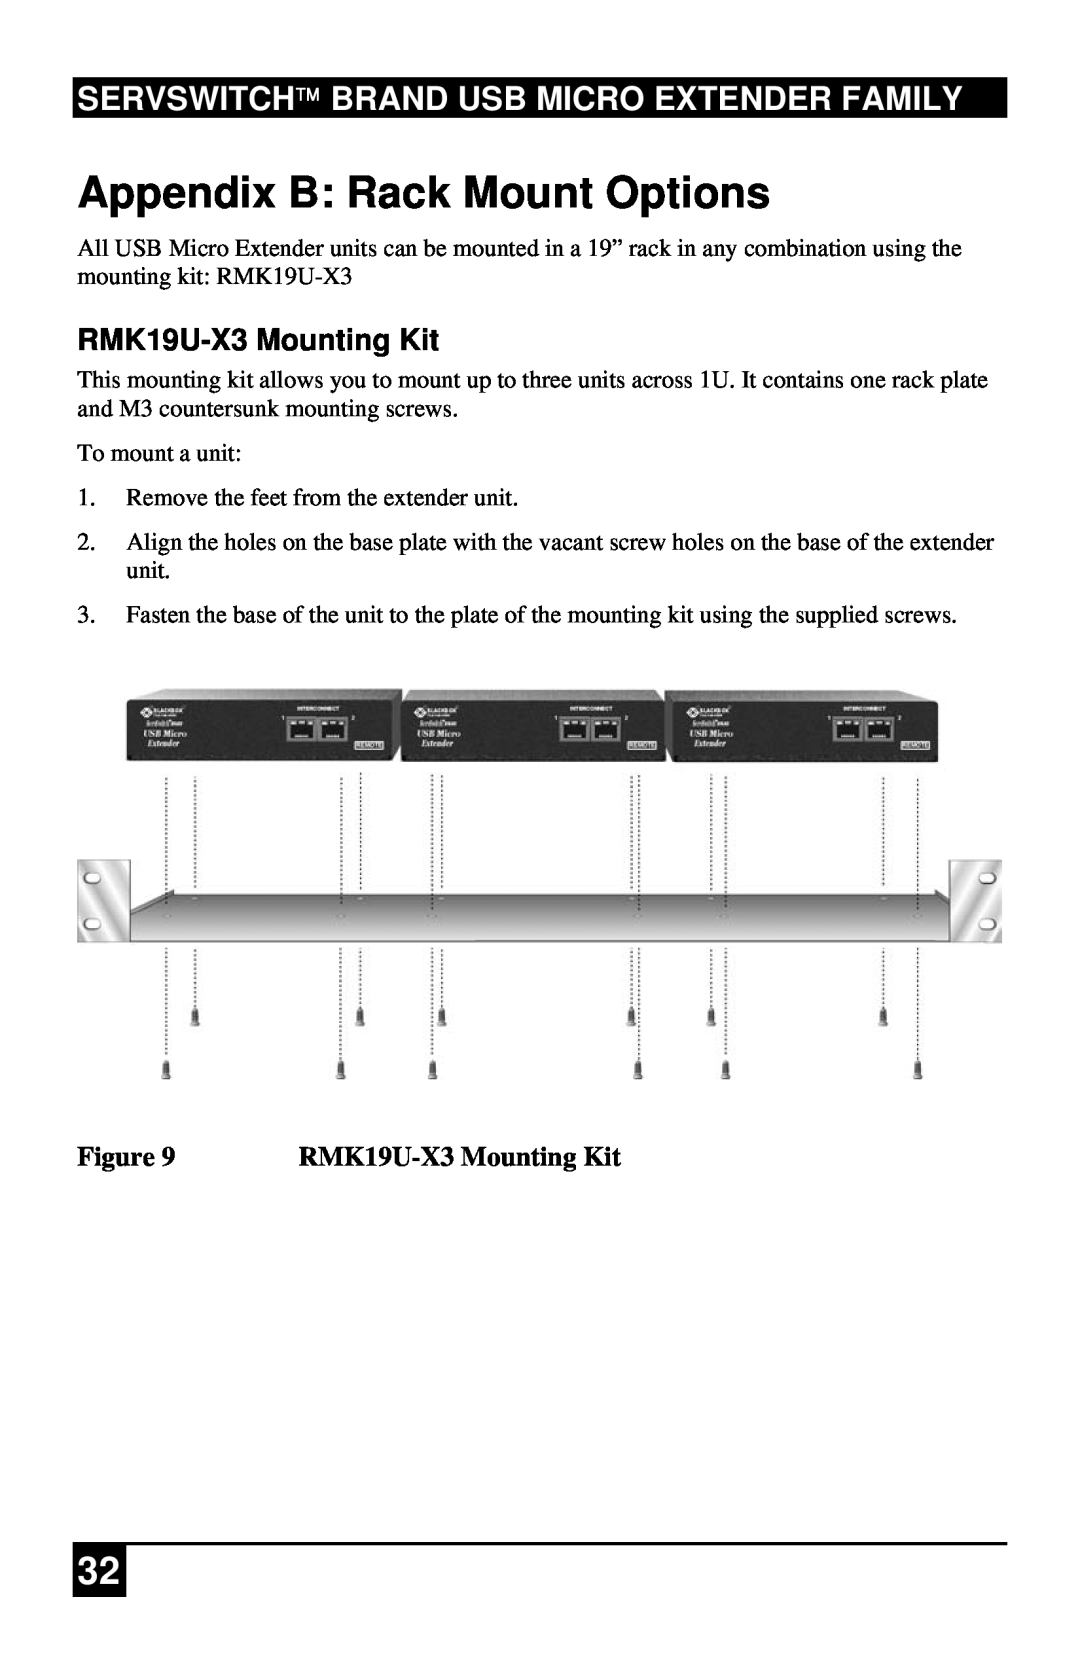 Black Box ACU4222A manual Appendix B Rack Mount Options, Servswitch Brand Usb Micro Extender Family, RMK19U-X3Mounting Kit 